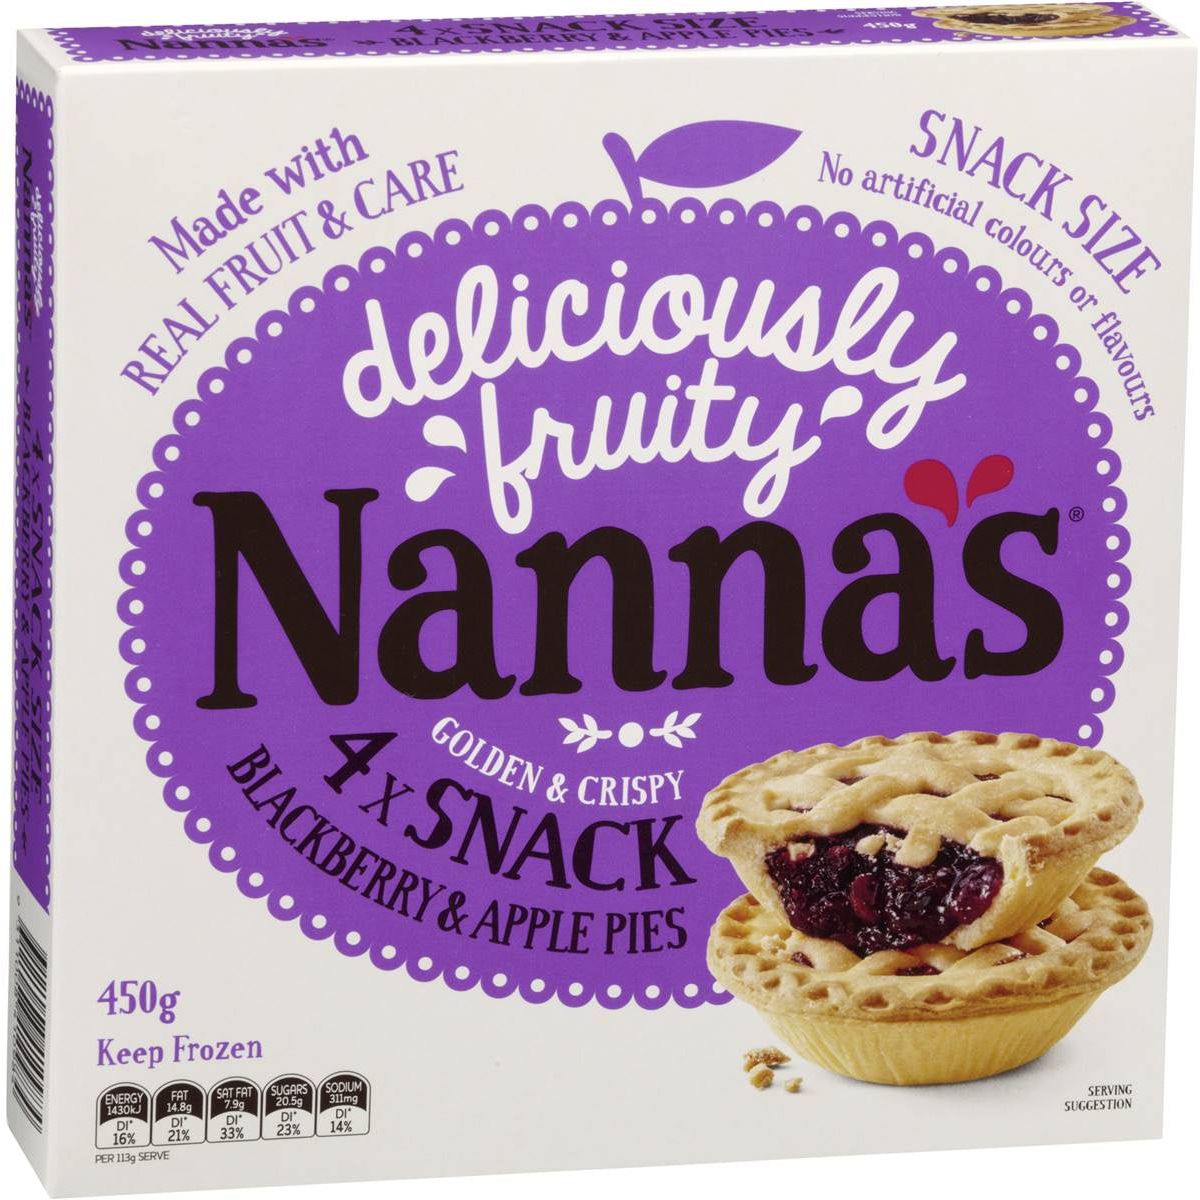 Nanna's Apple & Blackberry Pie 4 Pack